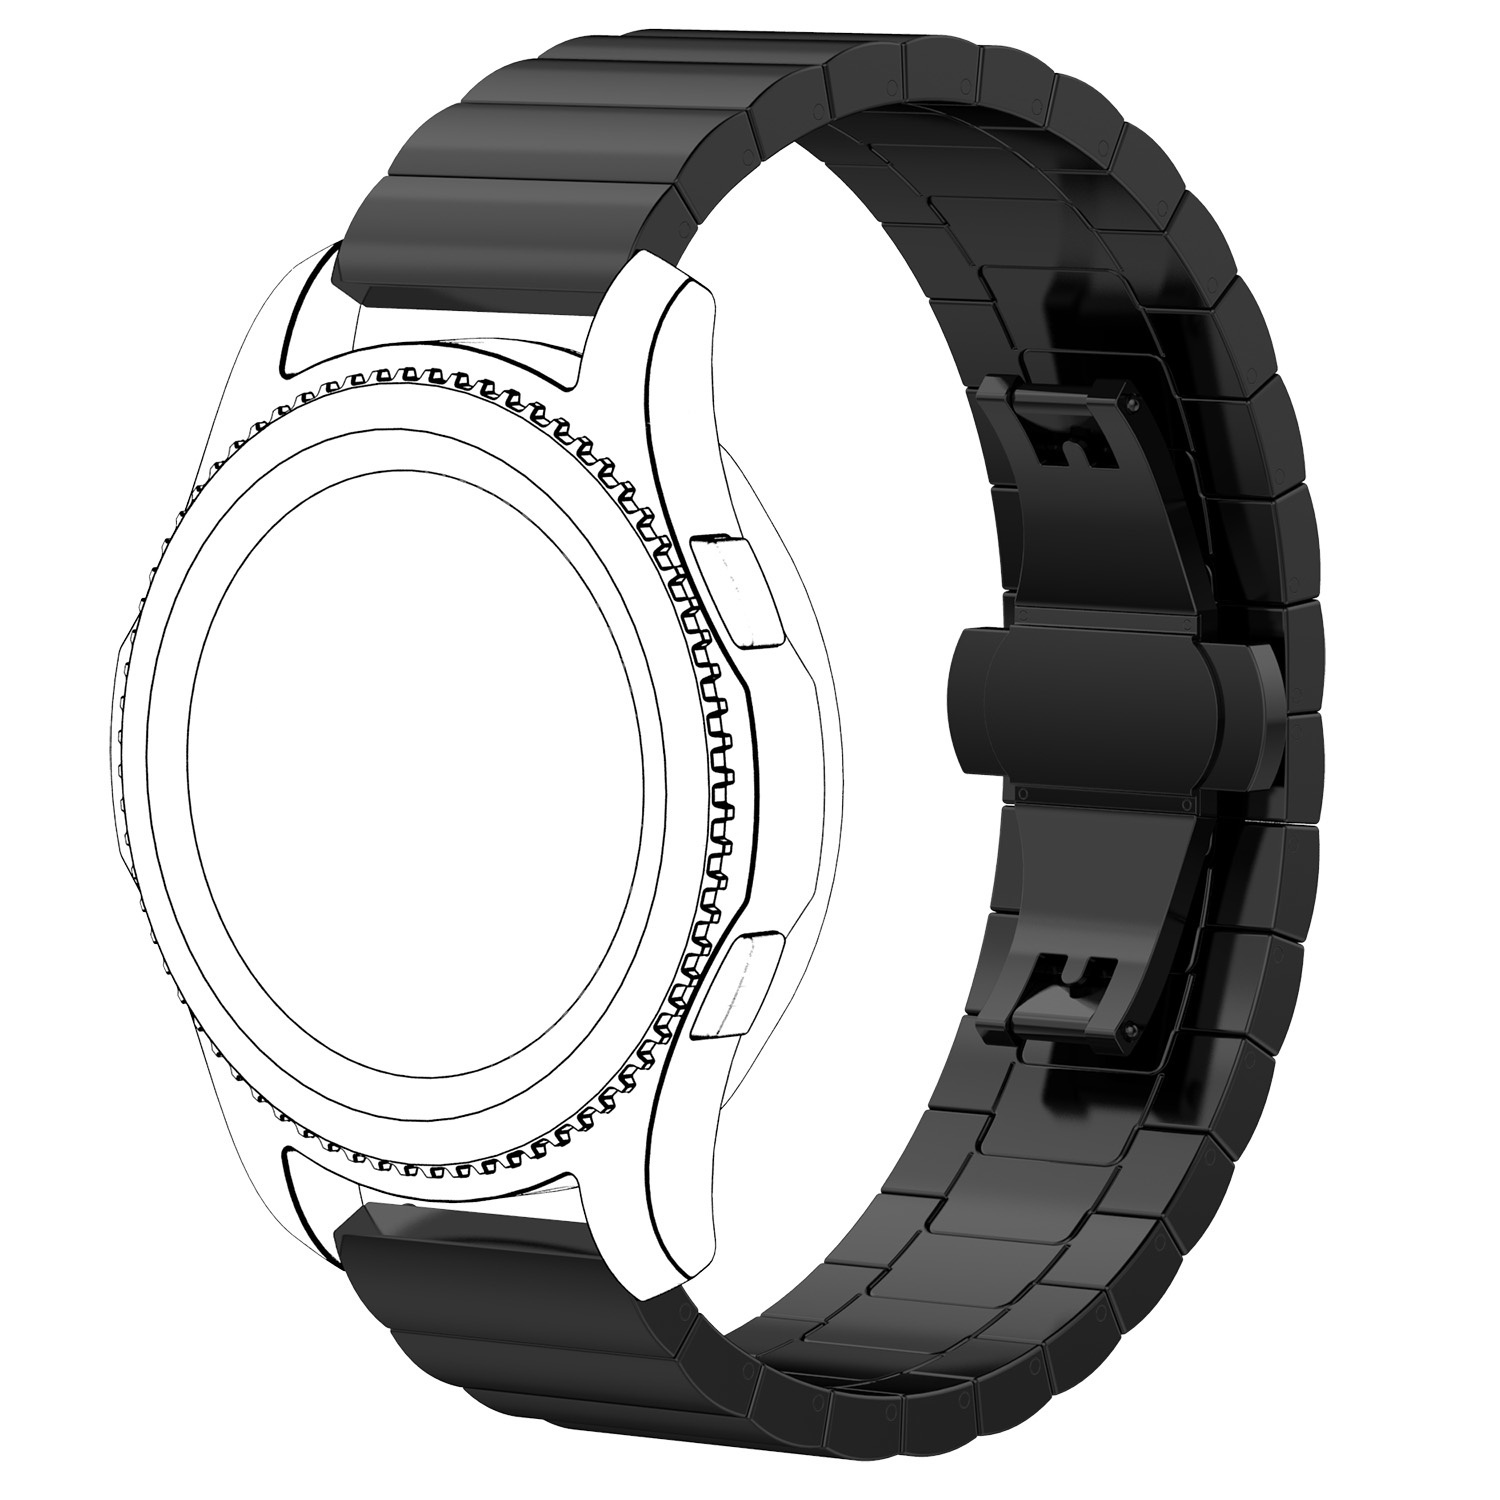 Cinturino a maglie per Samsung Galaxy Watch - nero